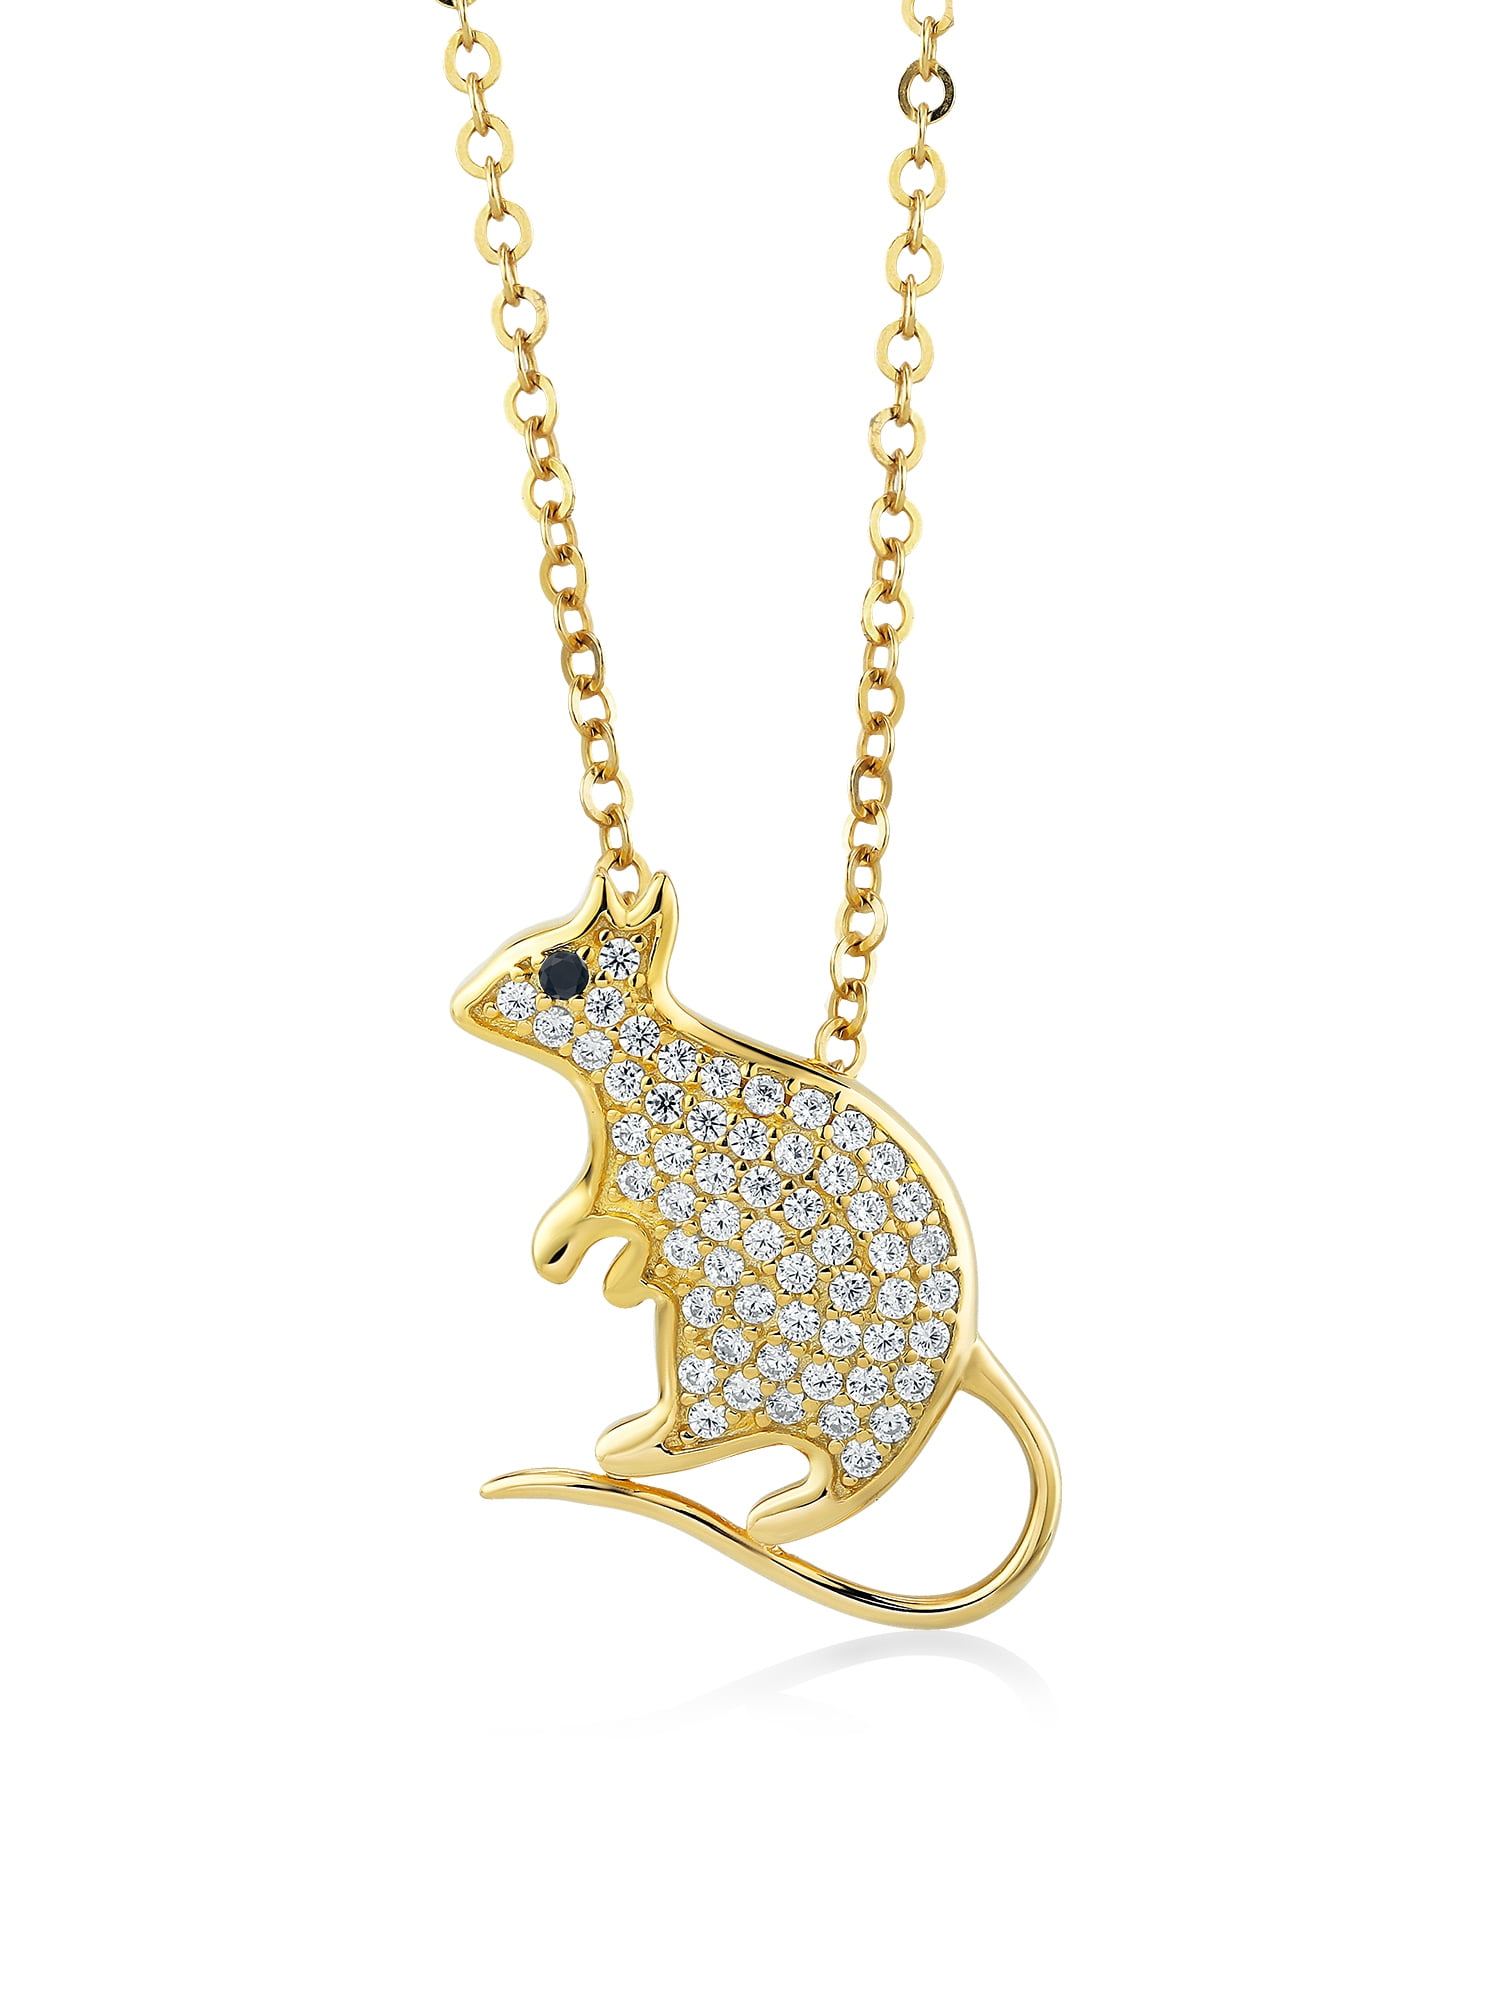 18K Gold & Diamond Little Girl Charm | Steven Fox Jewelry